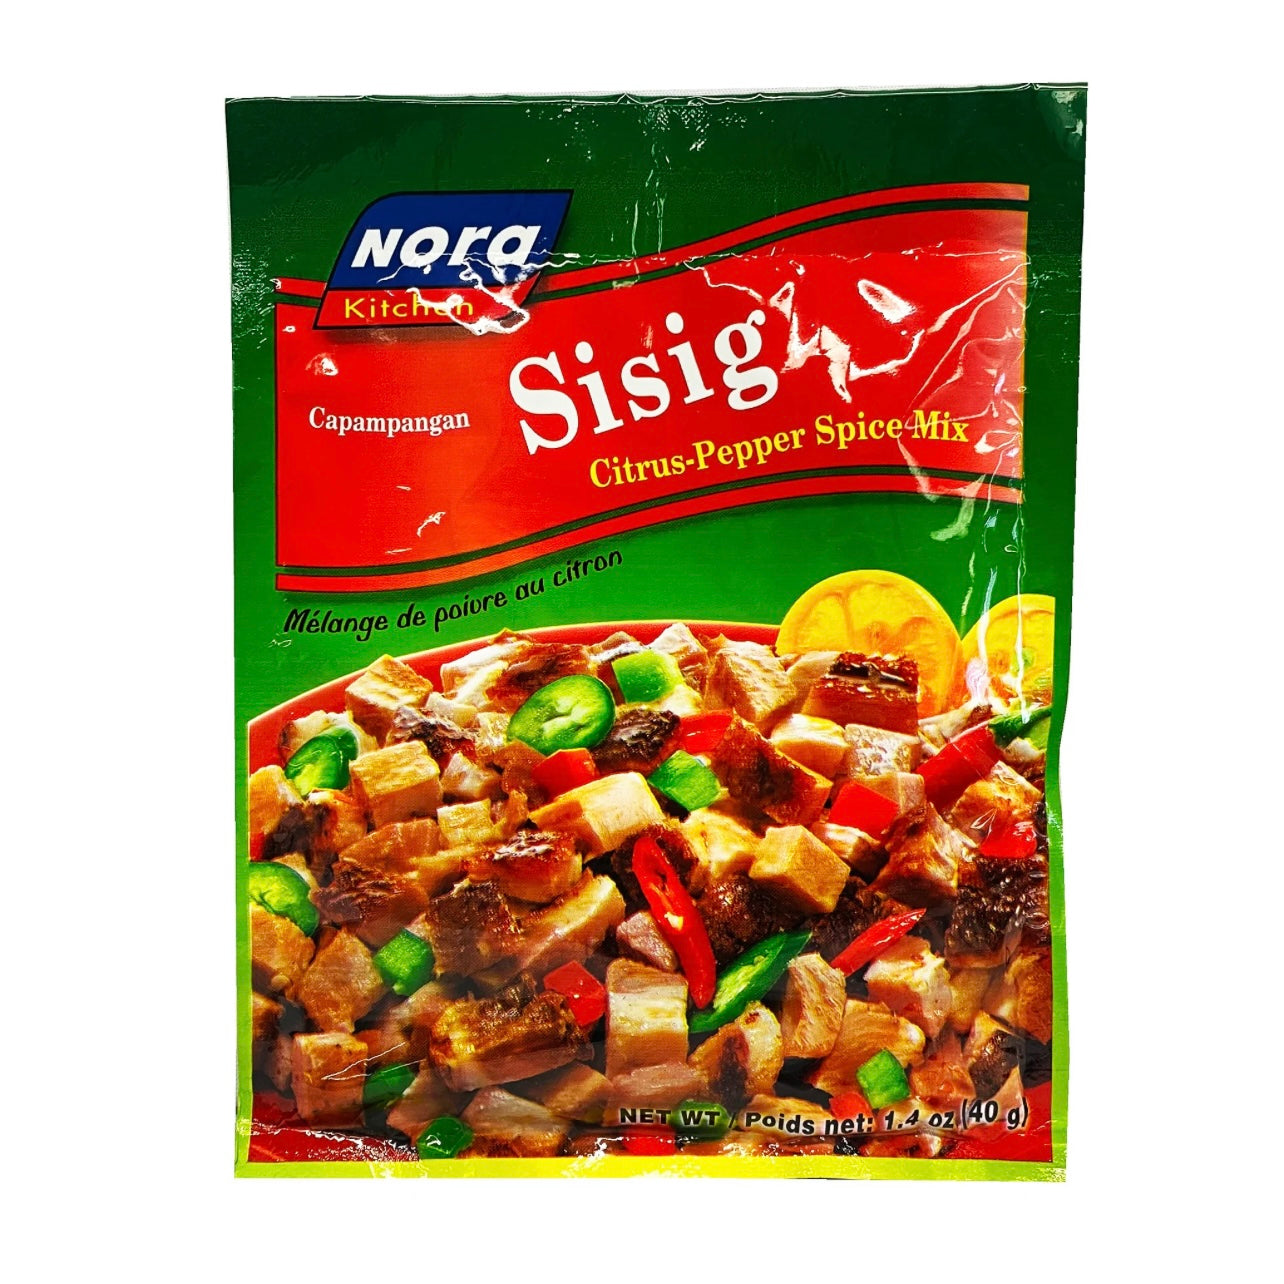 Nora Kitchen Sisig - Citrus Pepper Spice Mix